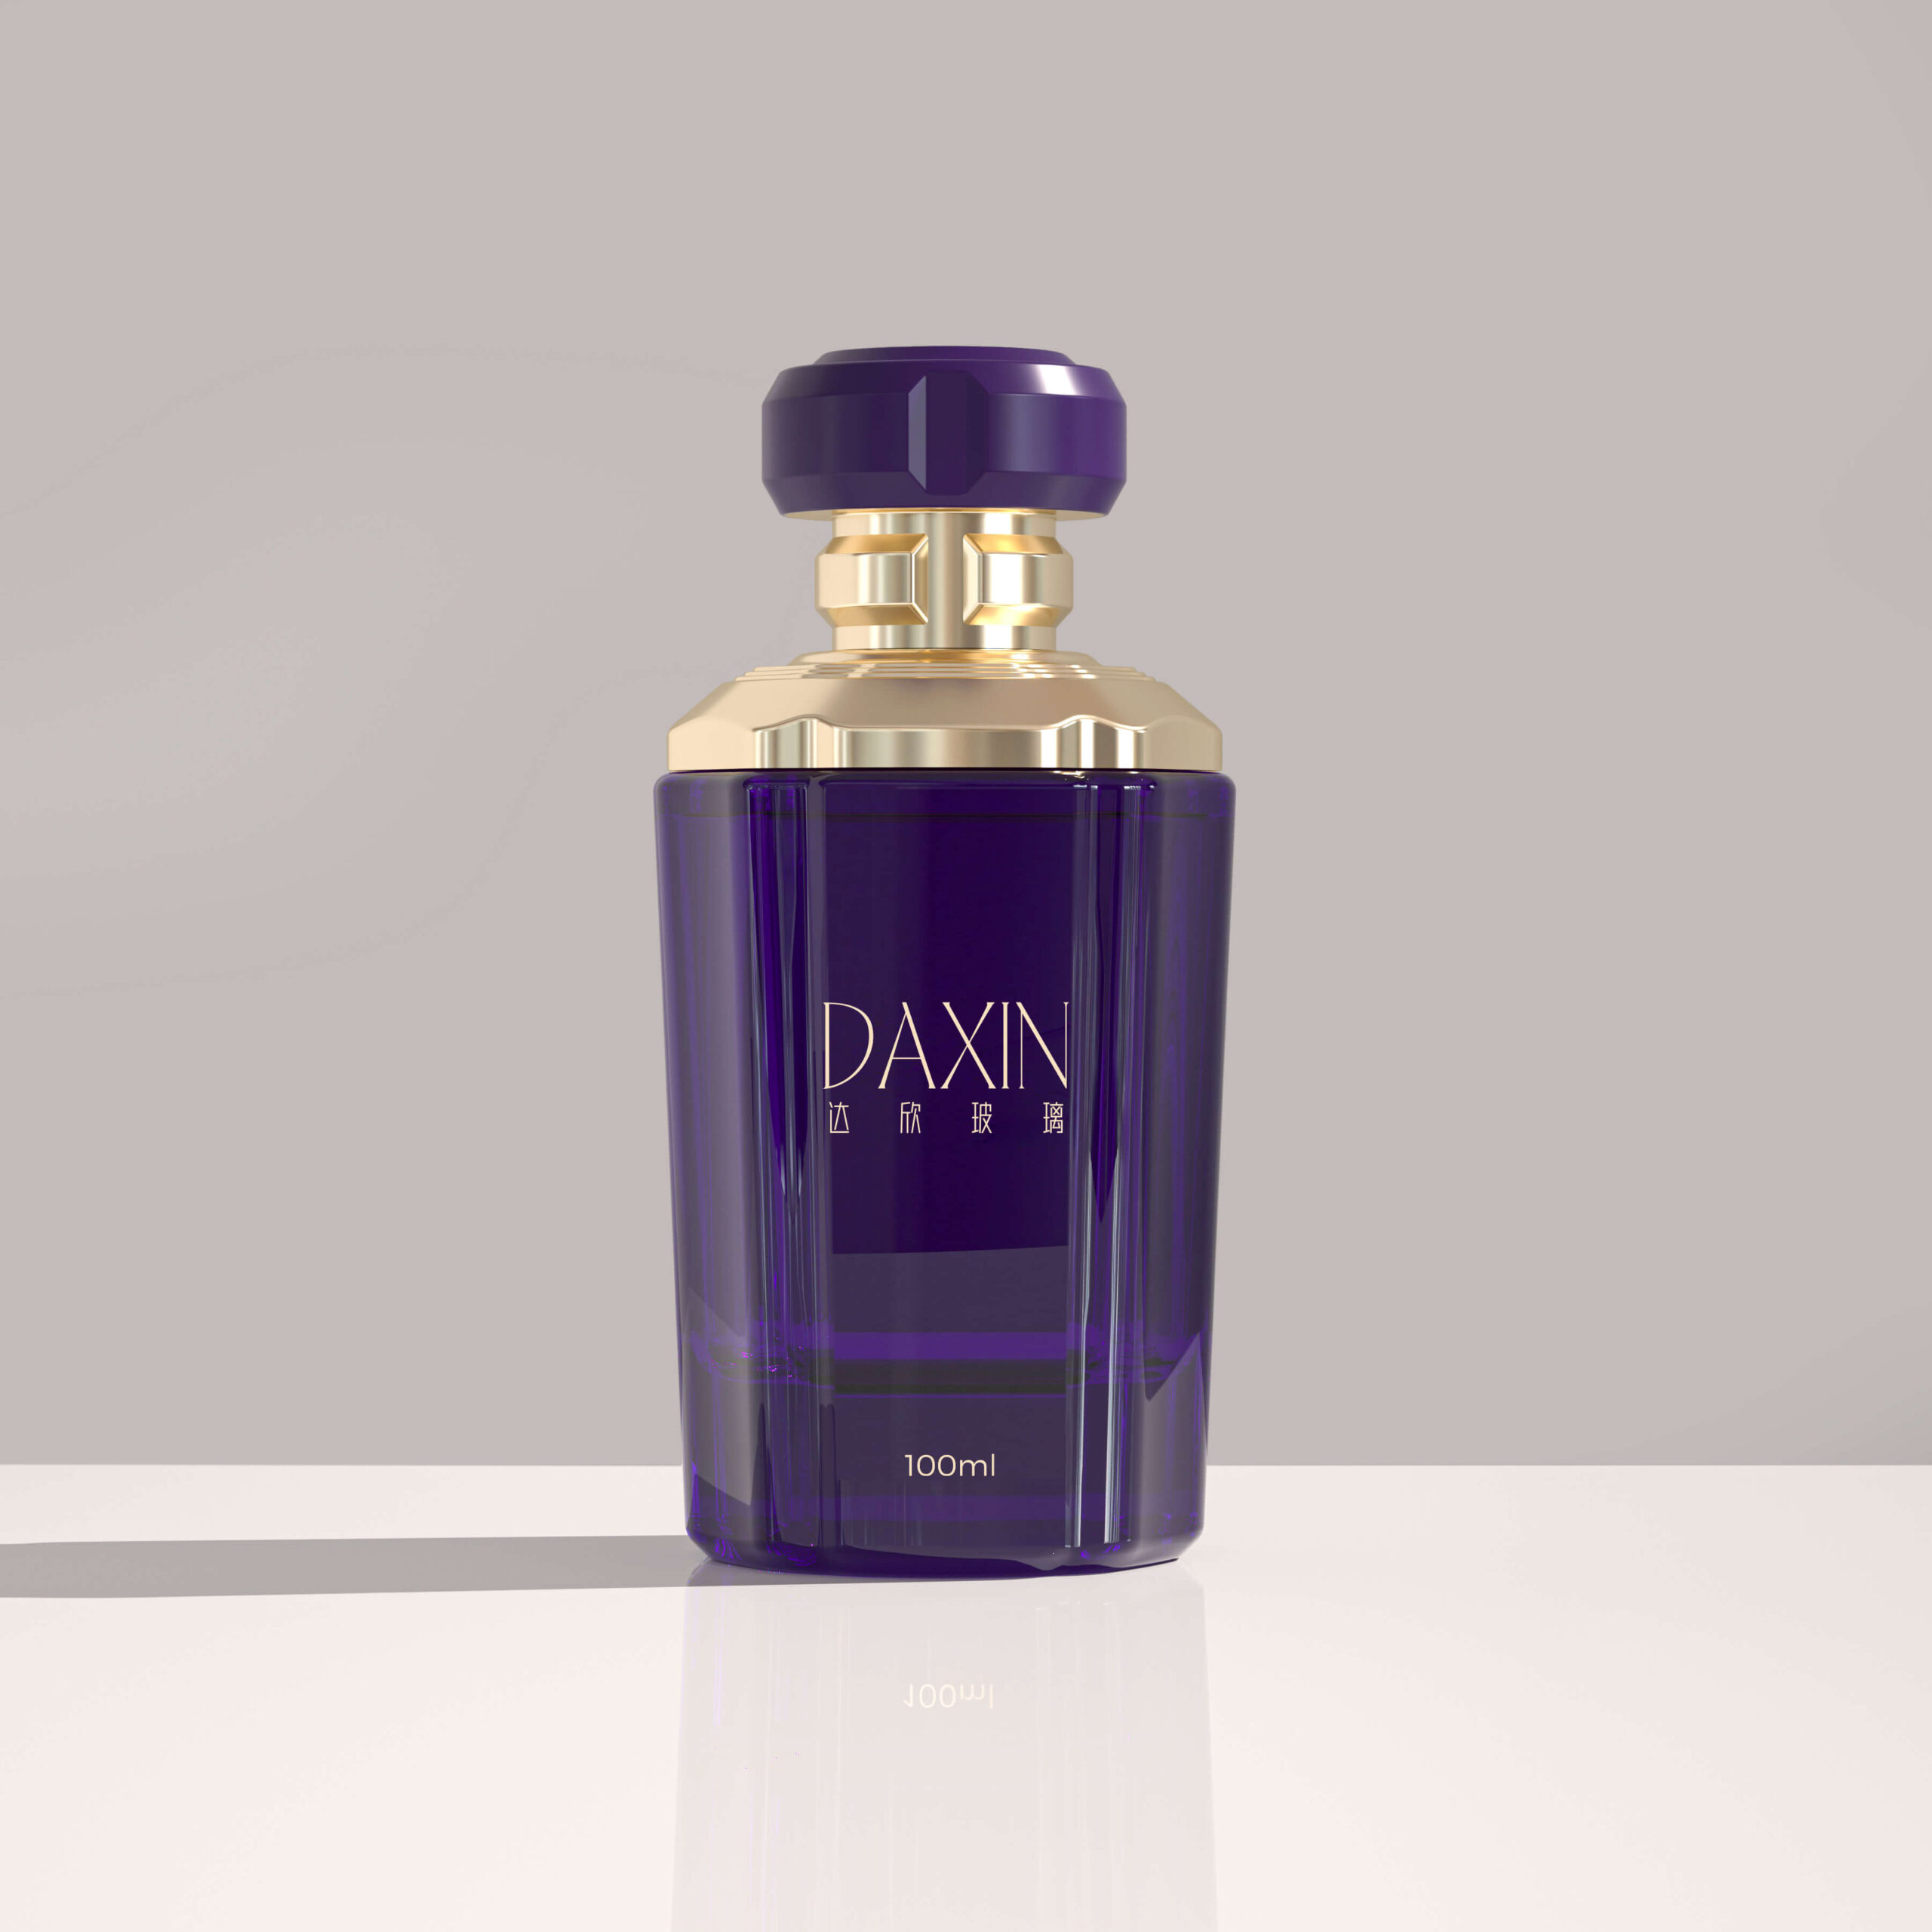 100ml perfume bottle (1)